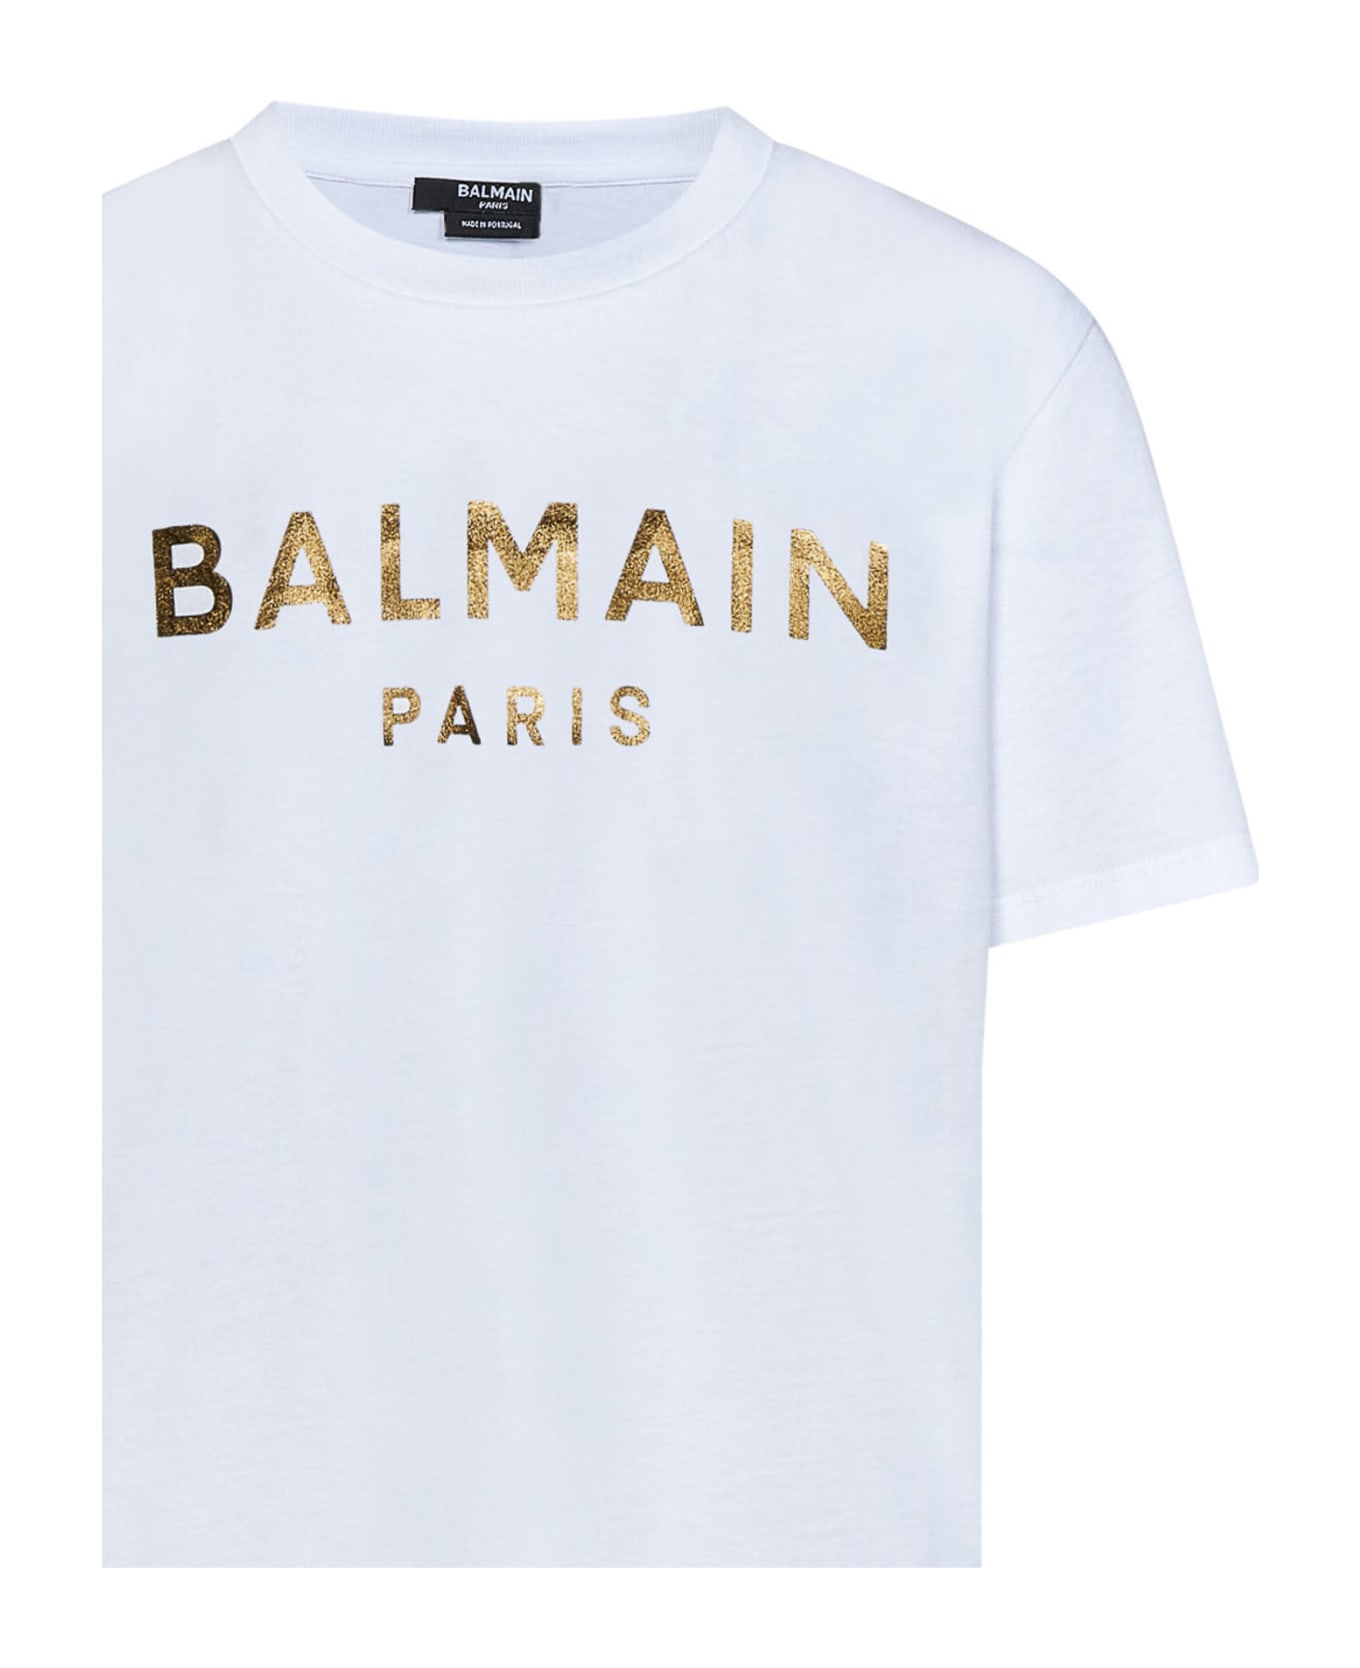 Balmain T-shirt - White/gold